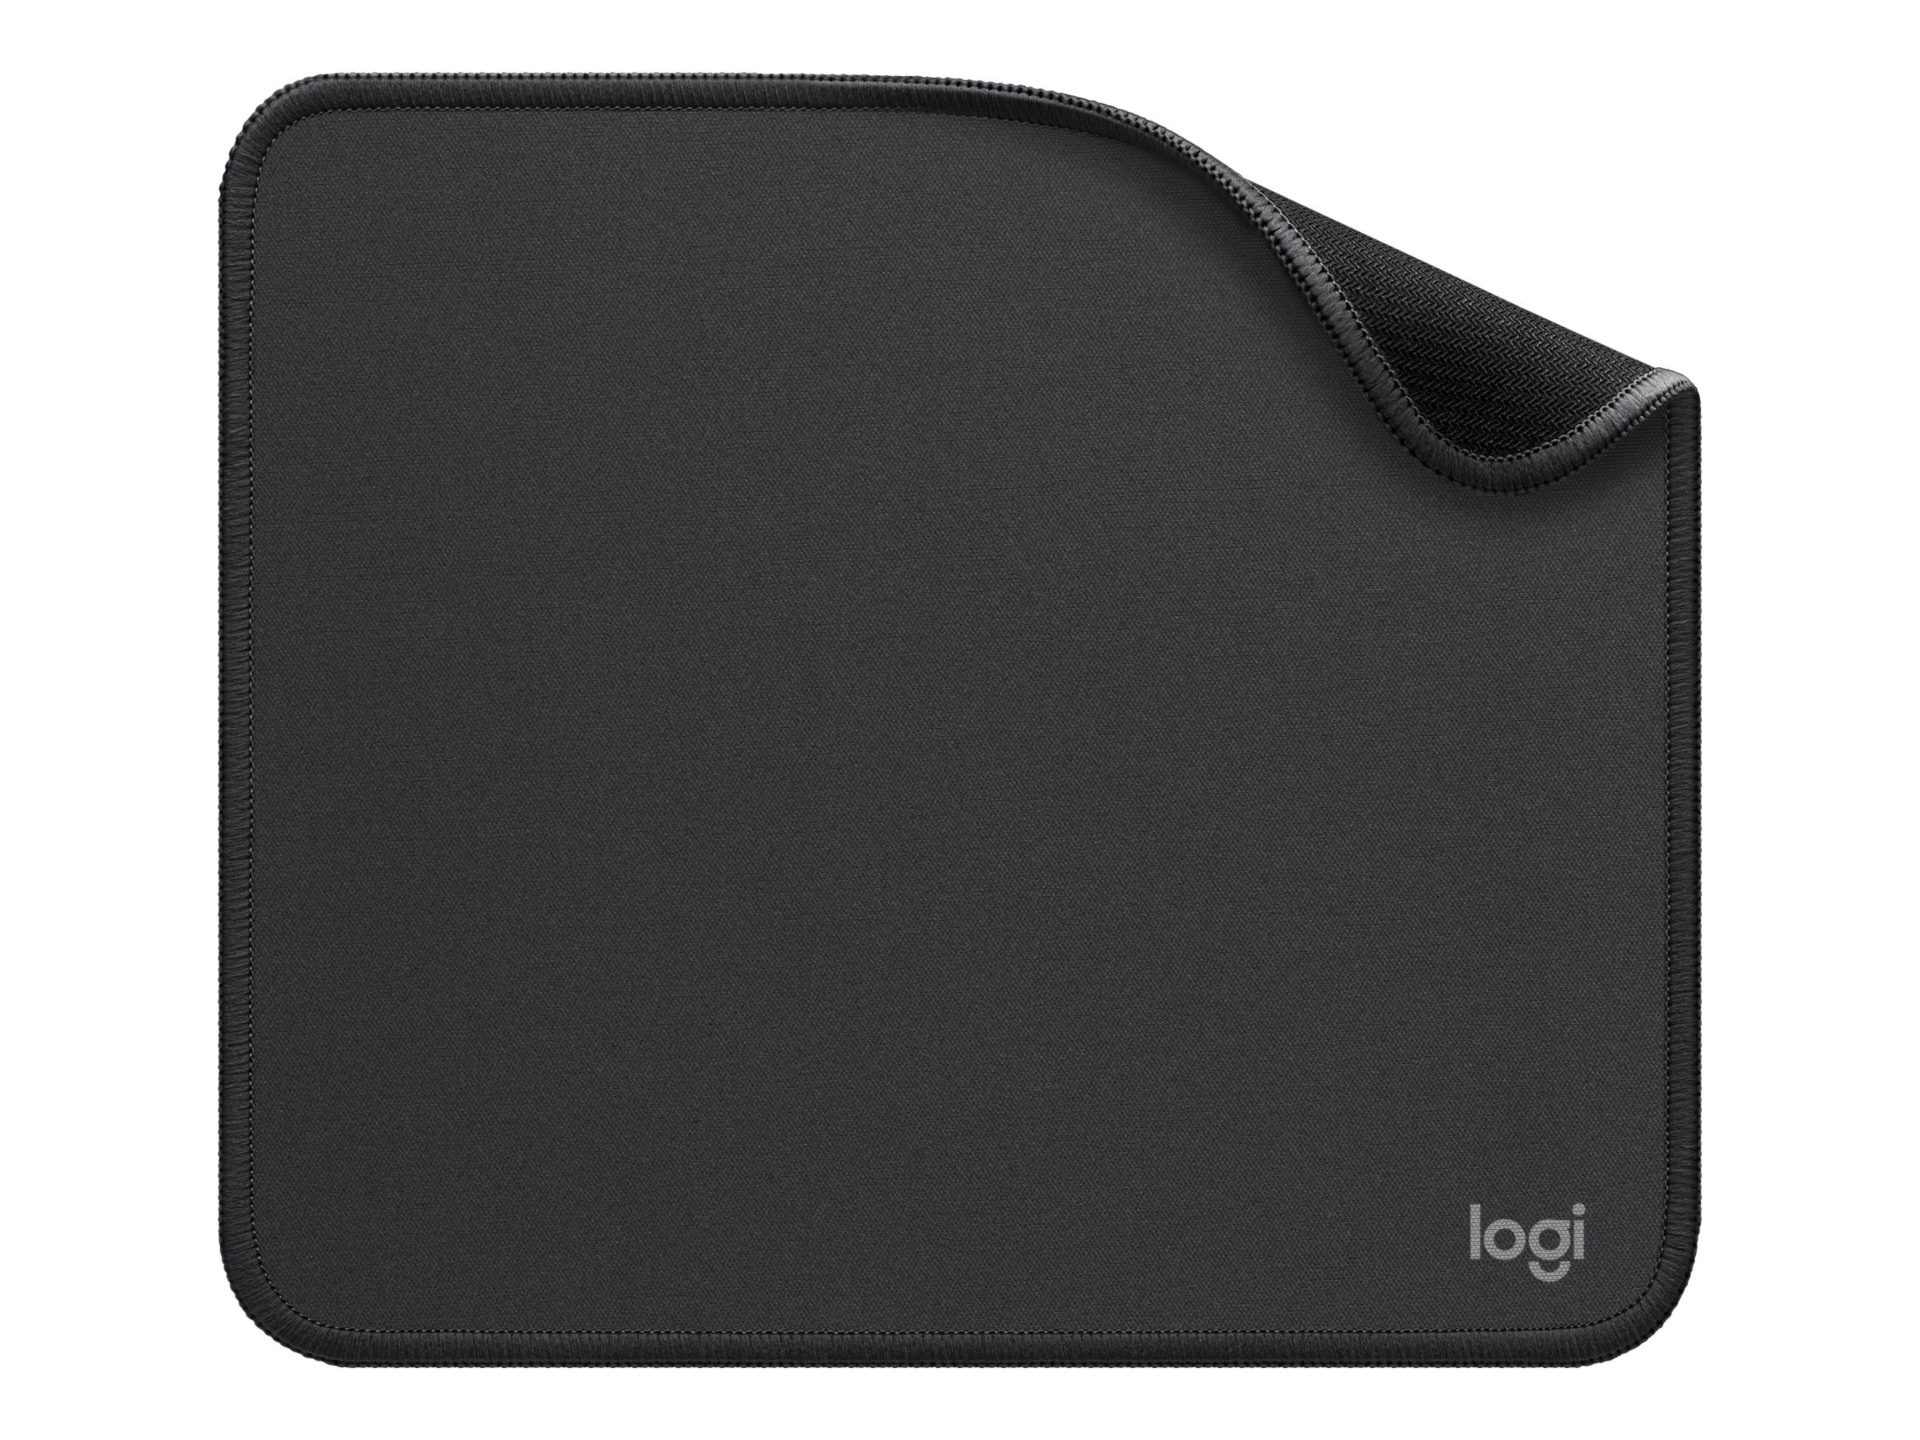 Logitech Studio Series mouse pad - anti-slip rubber base, easy gliding, spi